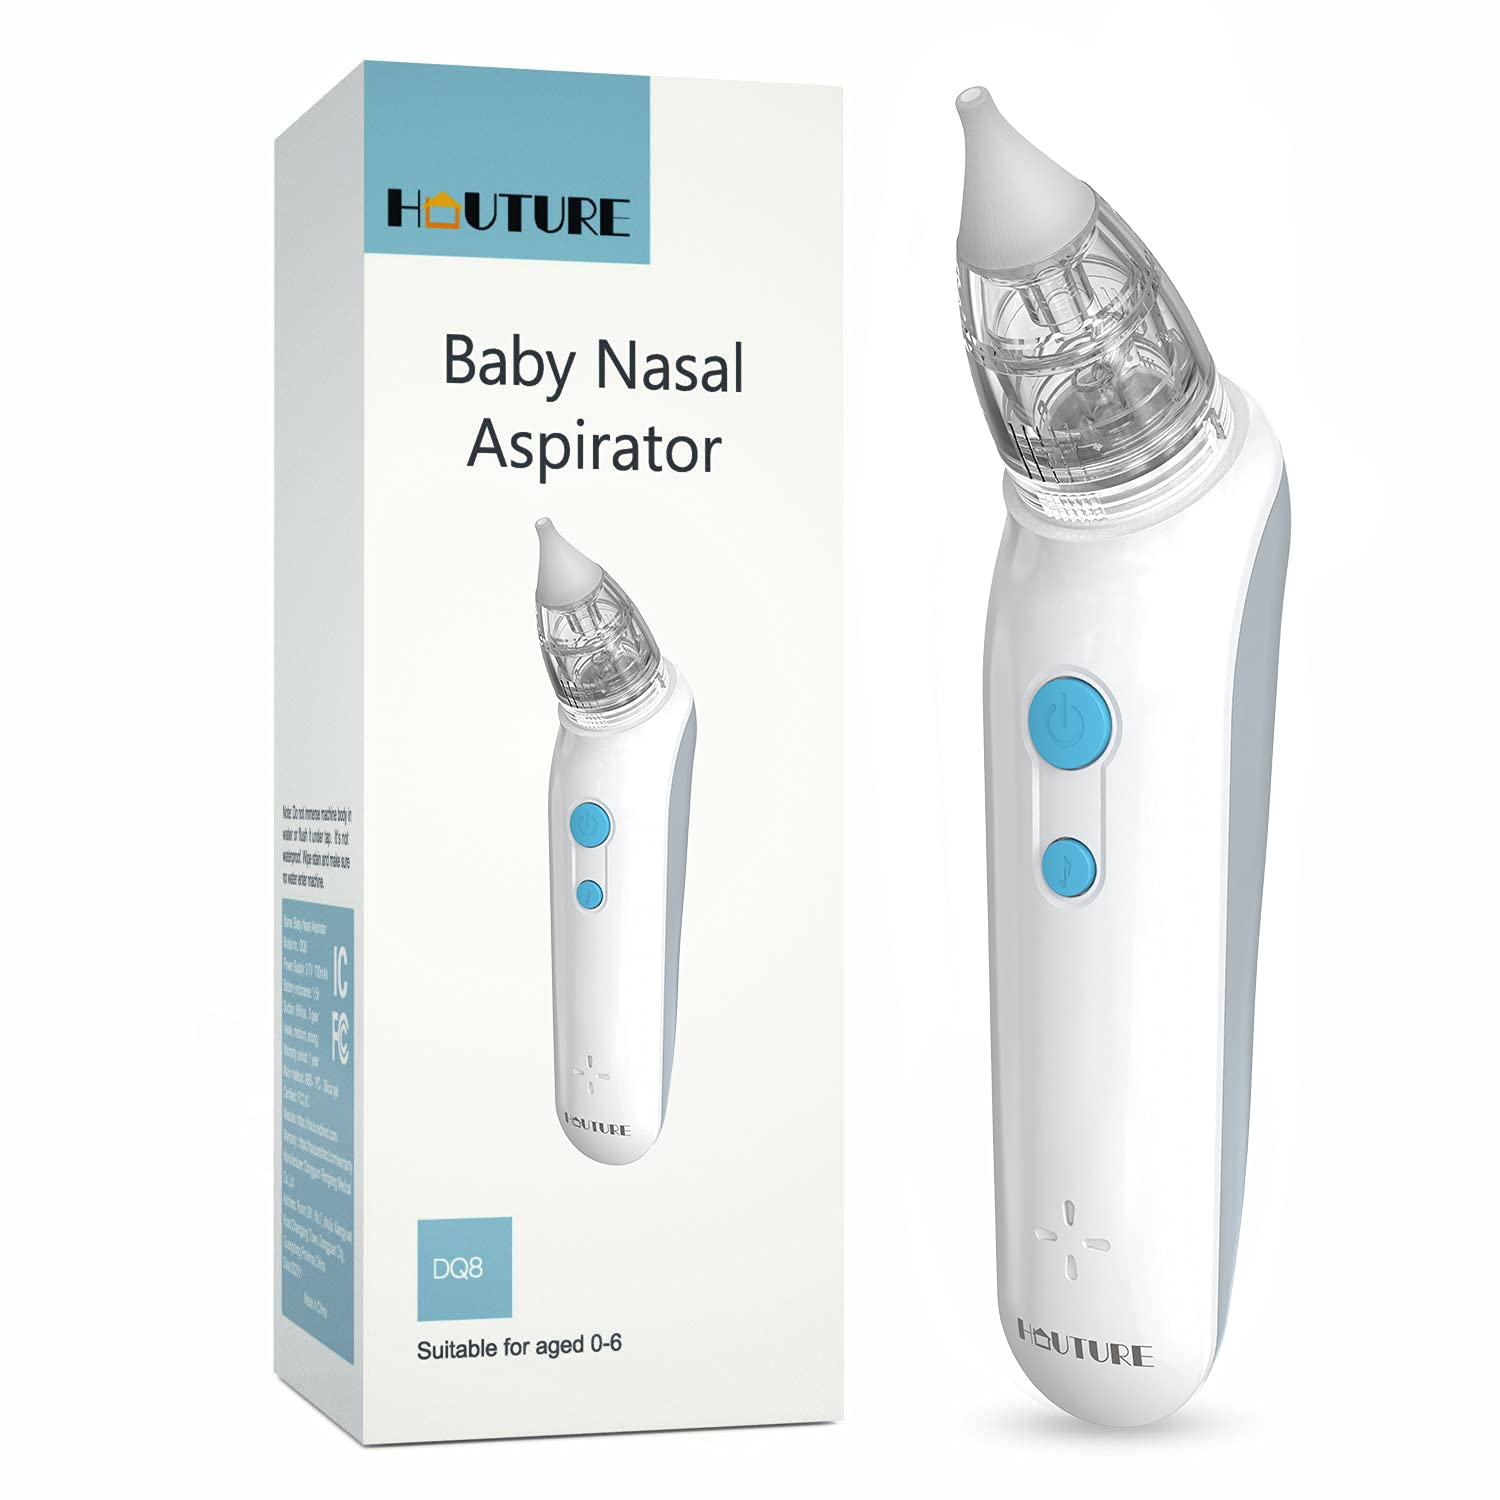 How to use a baby nasal aspirator, Baby